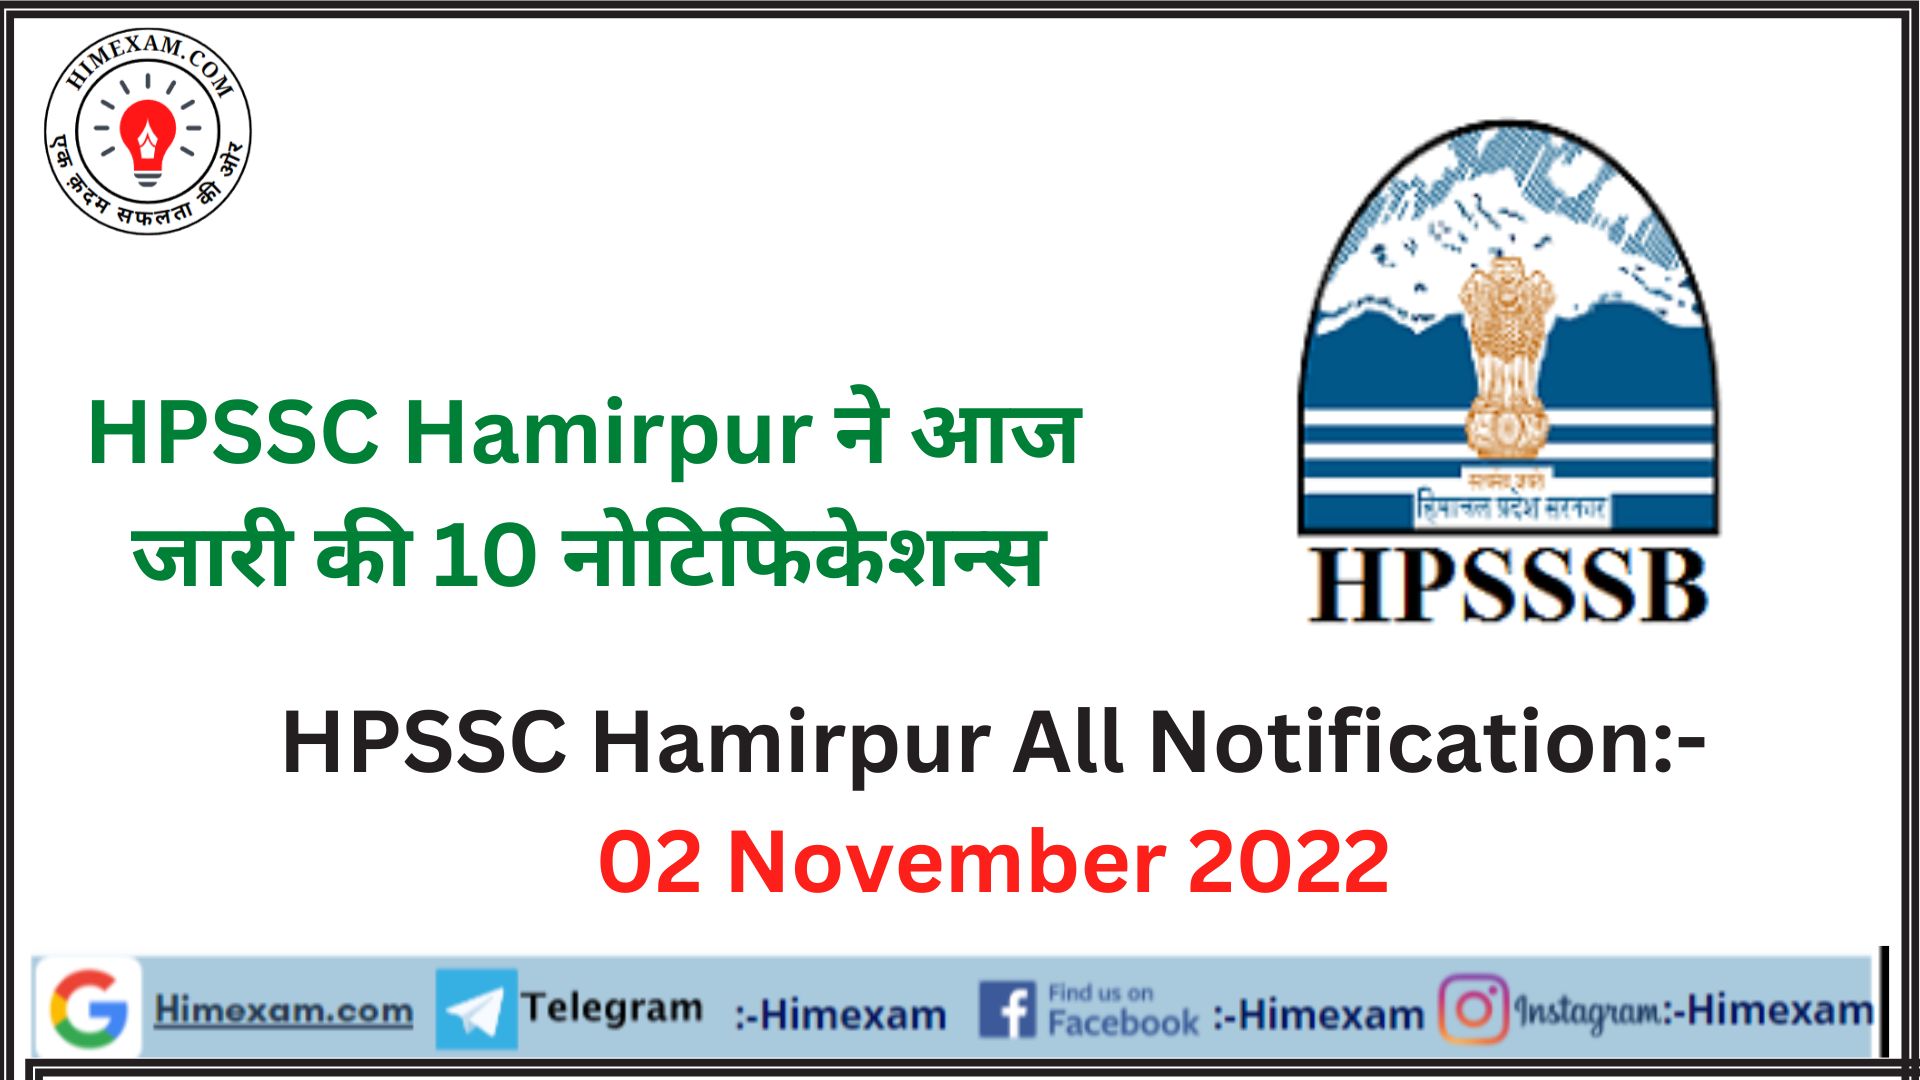 HPSSC Hamirpur All Notifications:- 02 November 2022